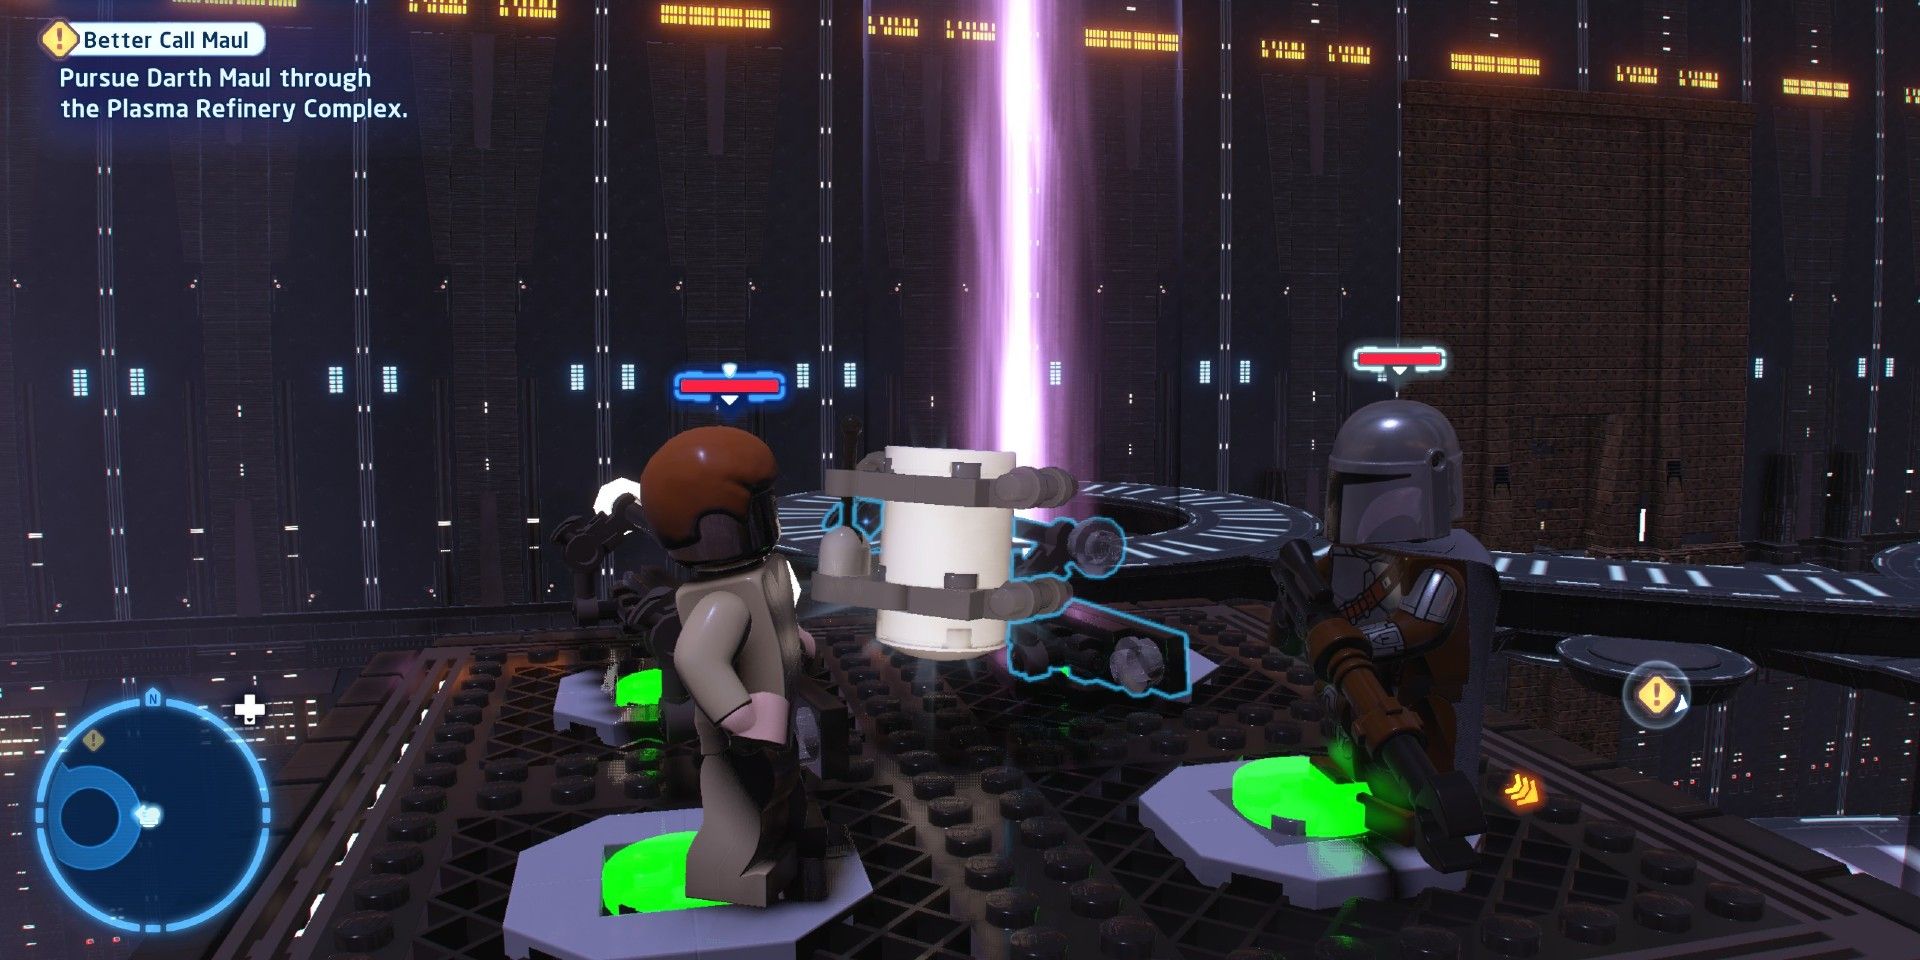 LEGO Star Wars Better Call Maul Minikits